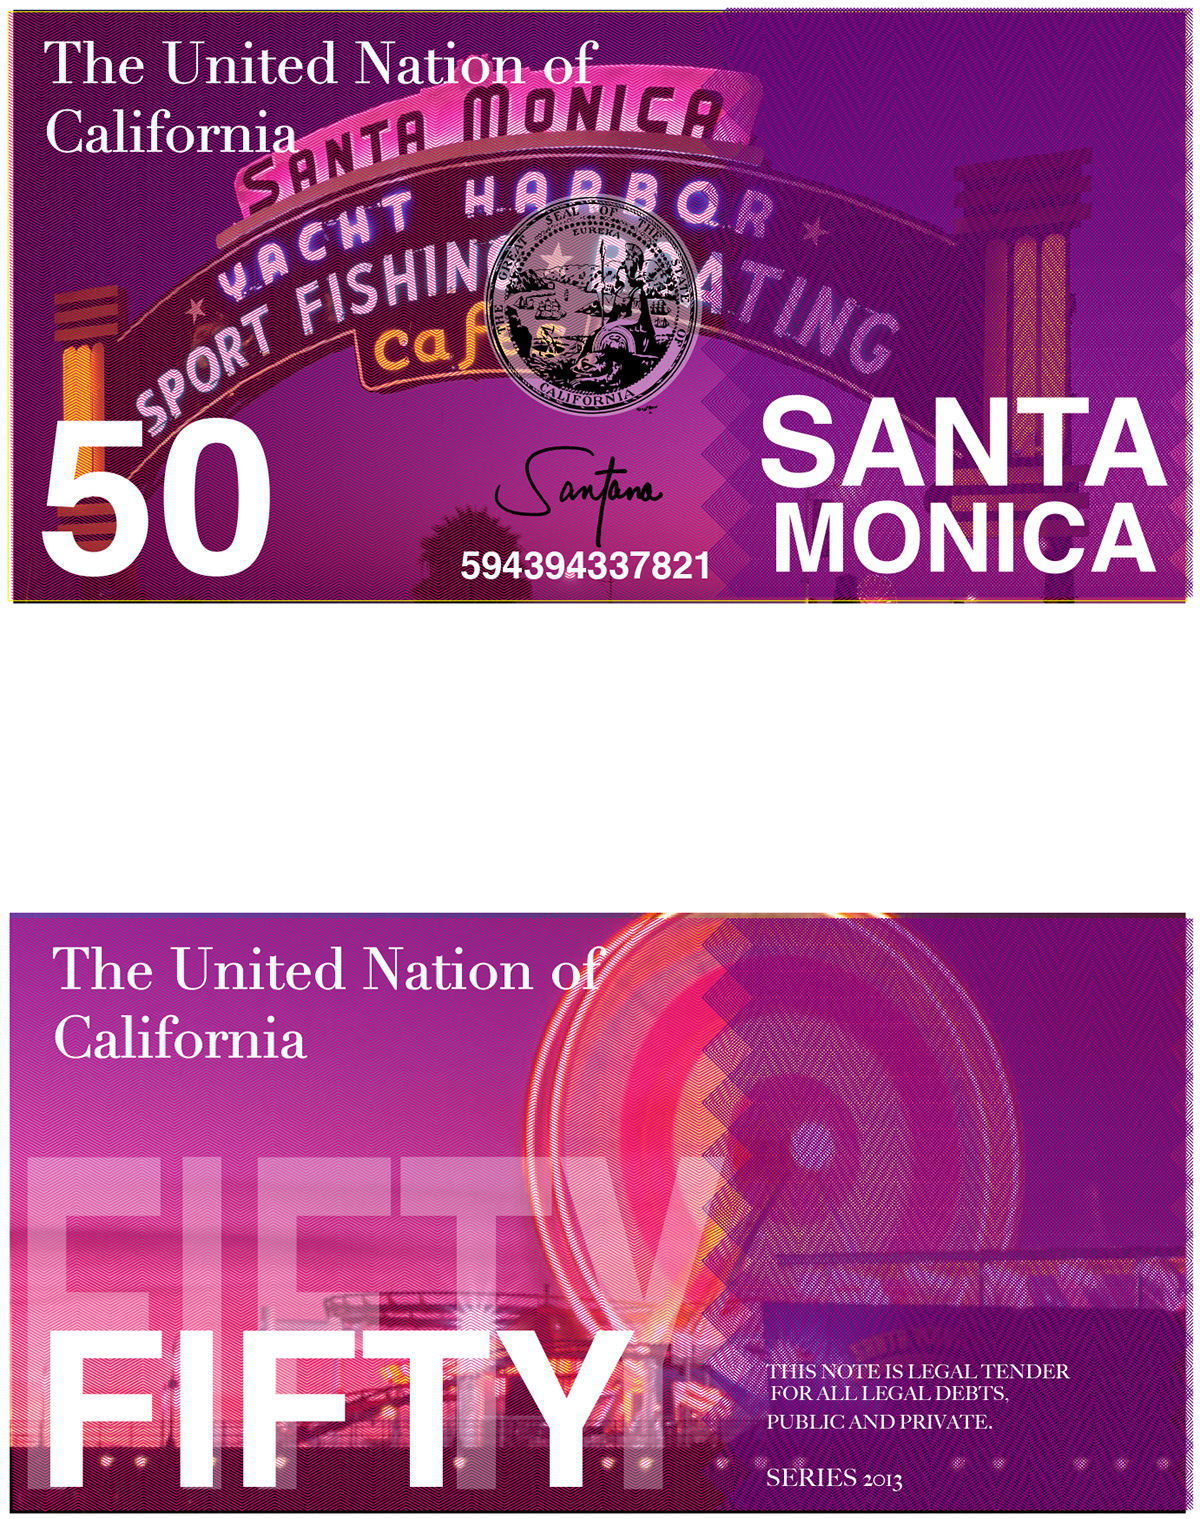 currency money Legal Tender California santa monica hollywood SANFRANSISCO Los Angeles